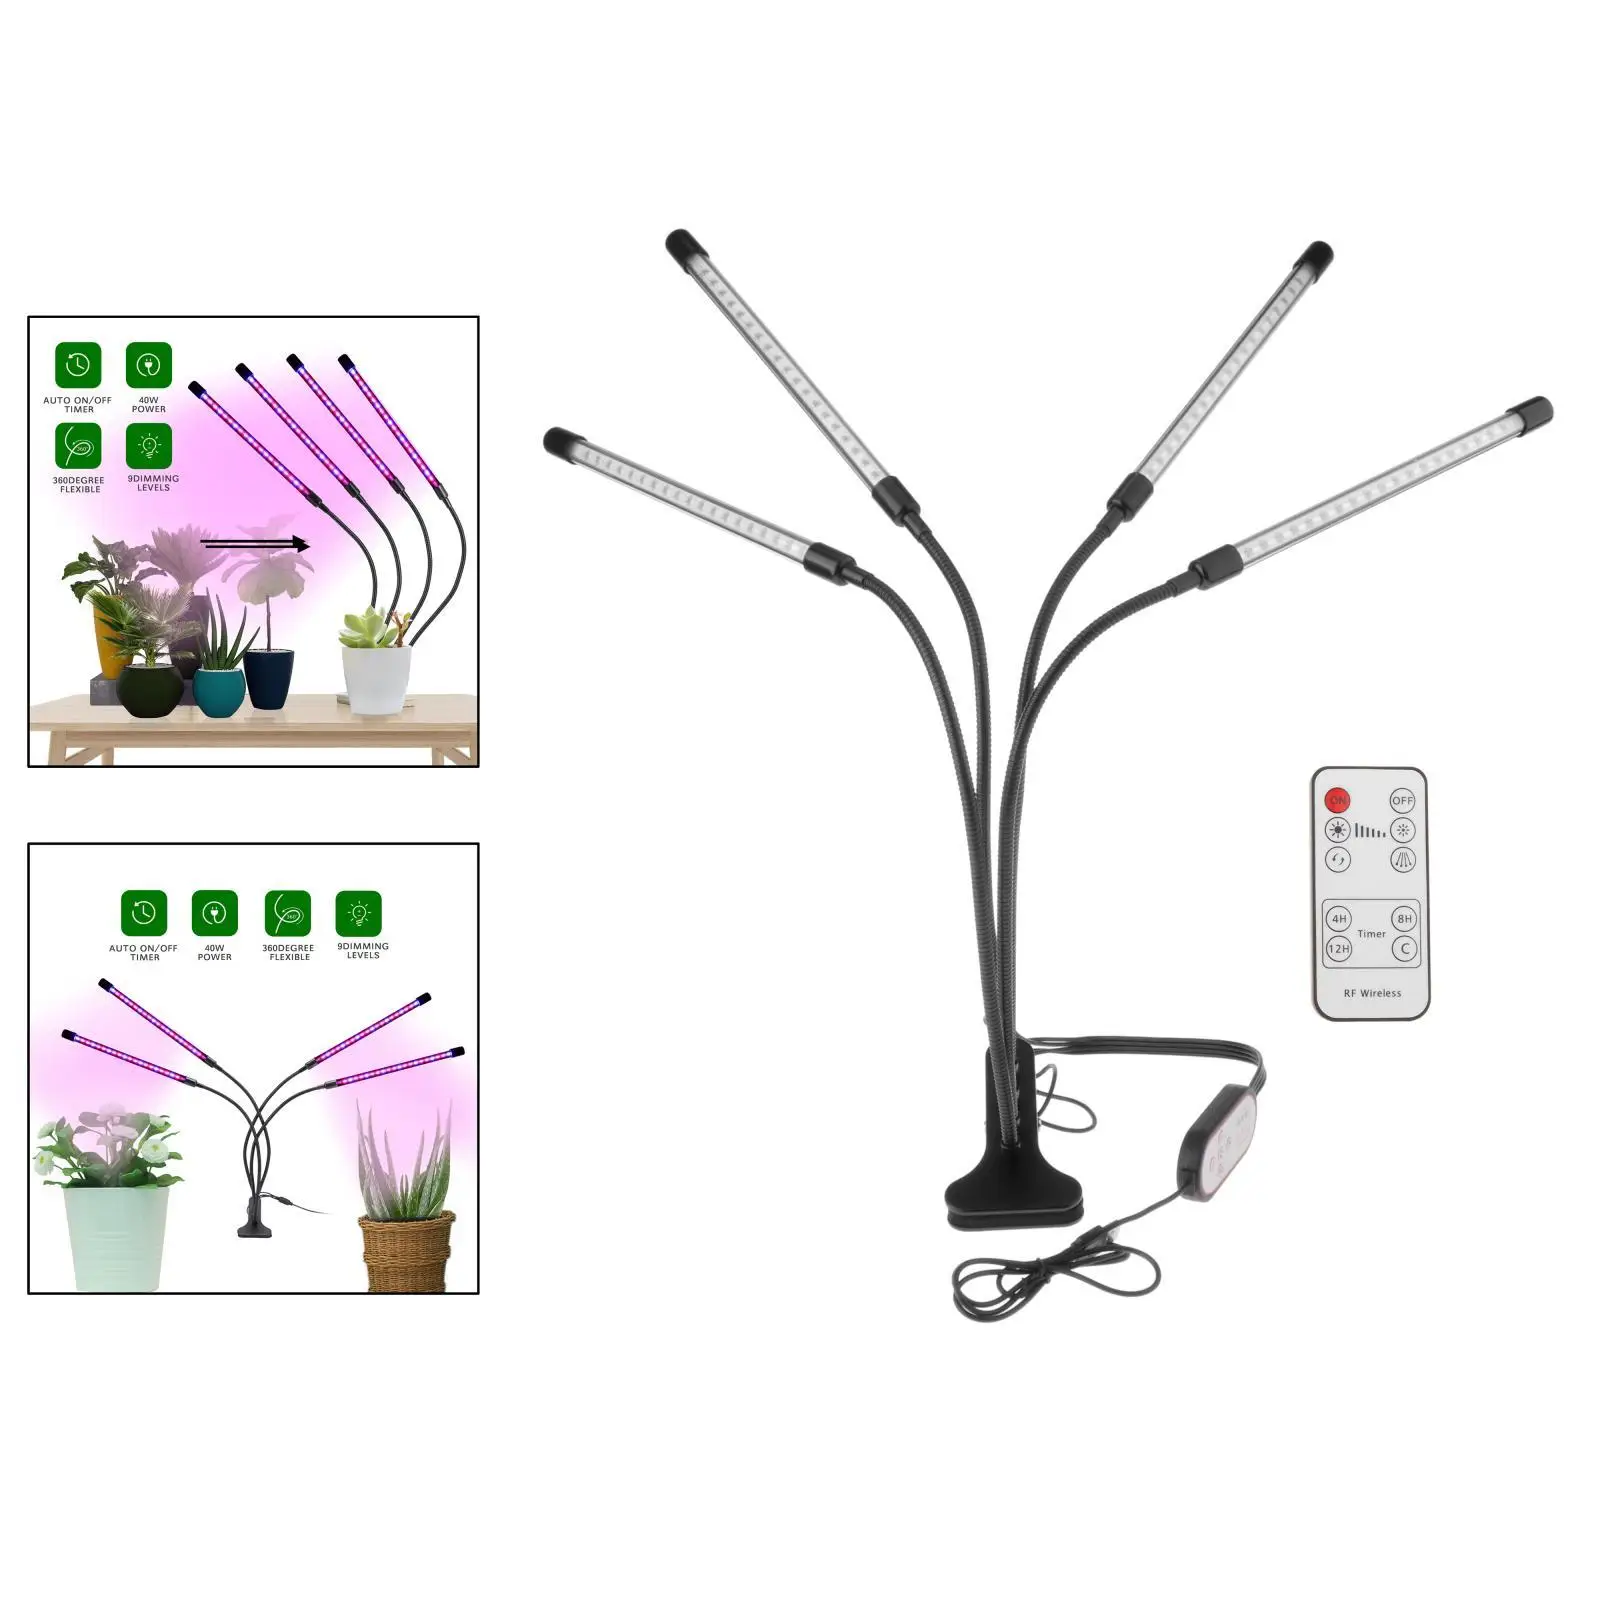 LED Grow Light Plant Lights with 40W 80 Lamp Bulbs 3 Lighting Modes